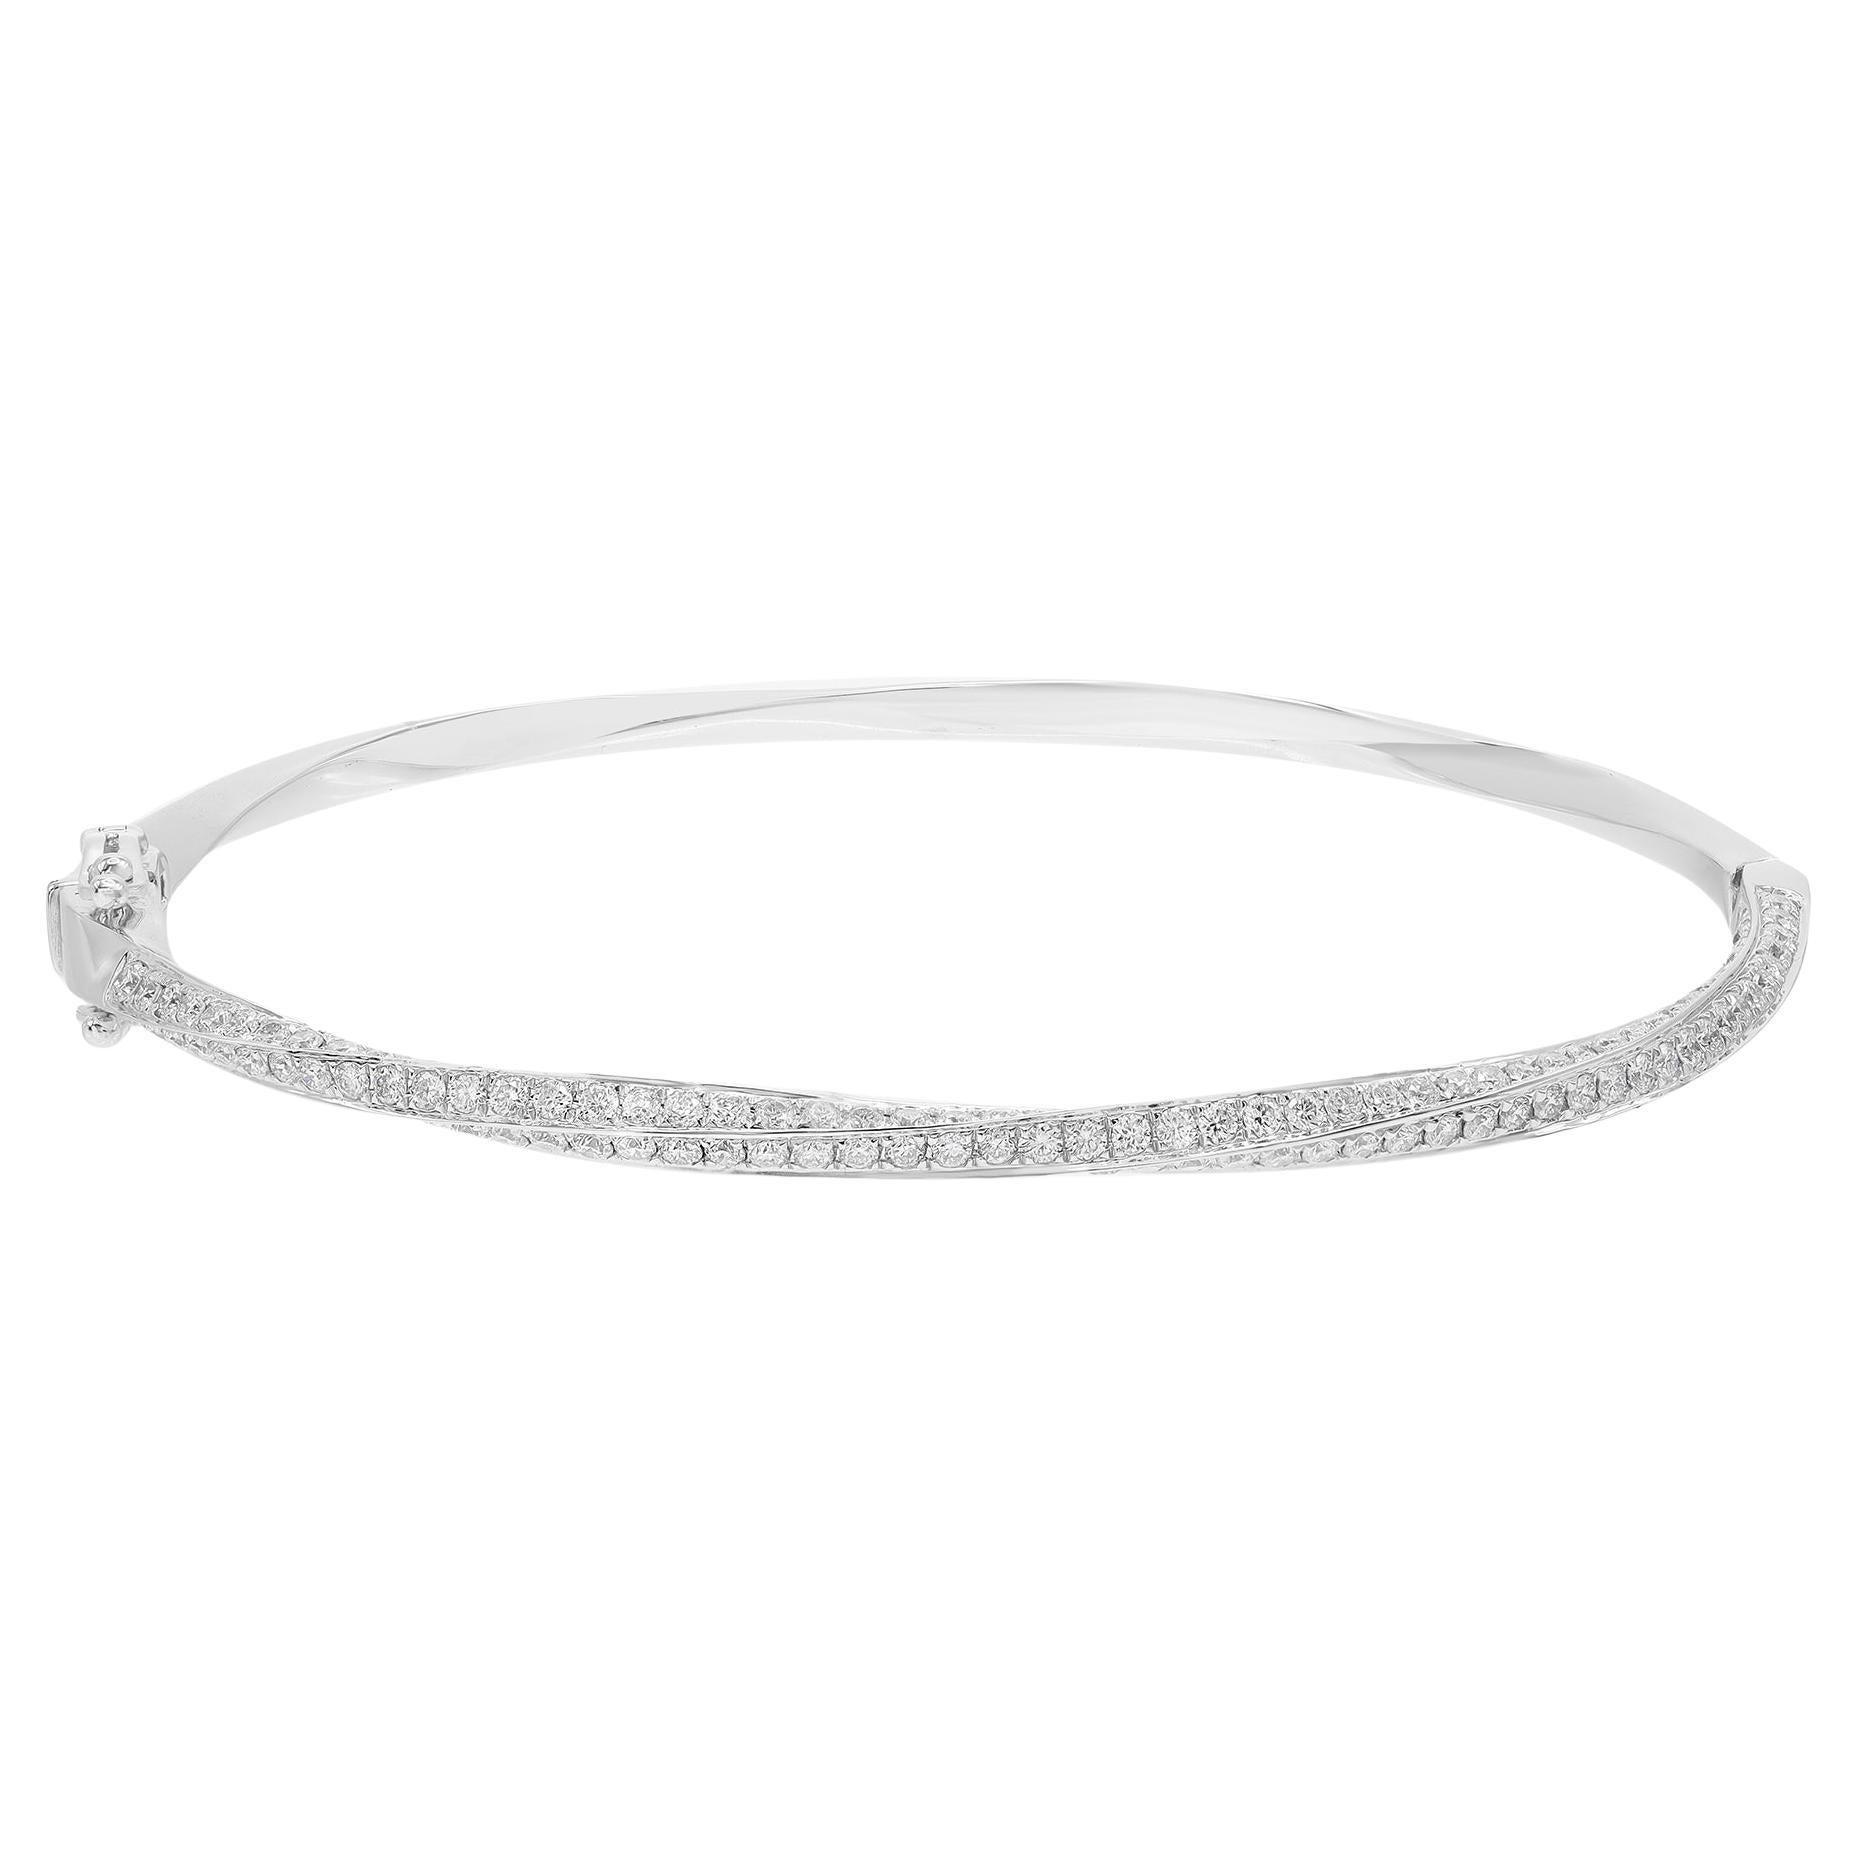 Rachel Koen Pave Set Round Cut Diamond Bangle Bracelet 18K White Gold 2.09Cttw For Sale